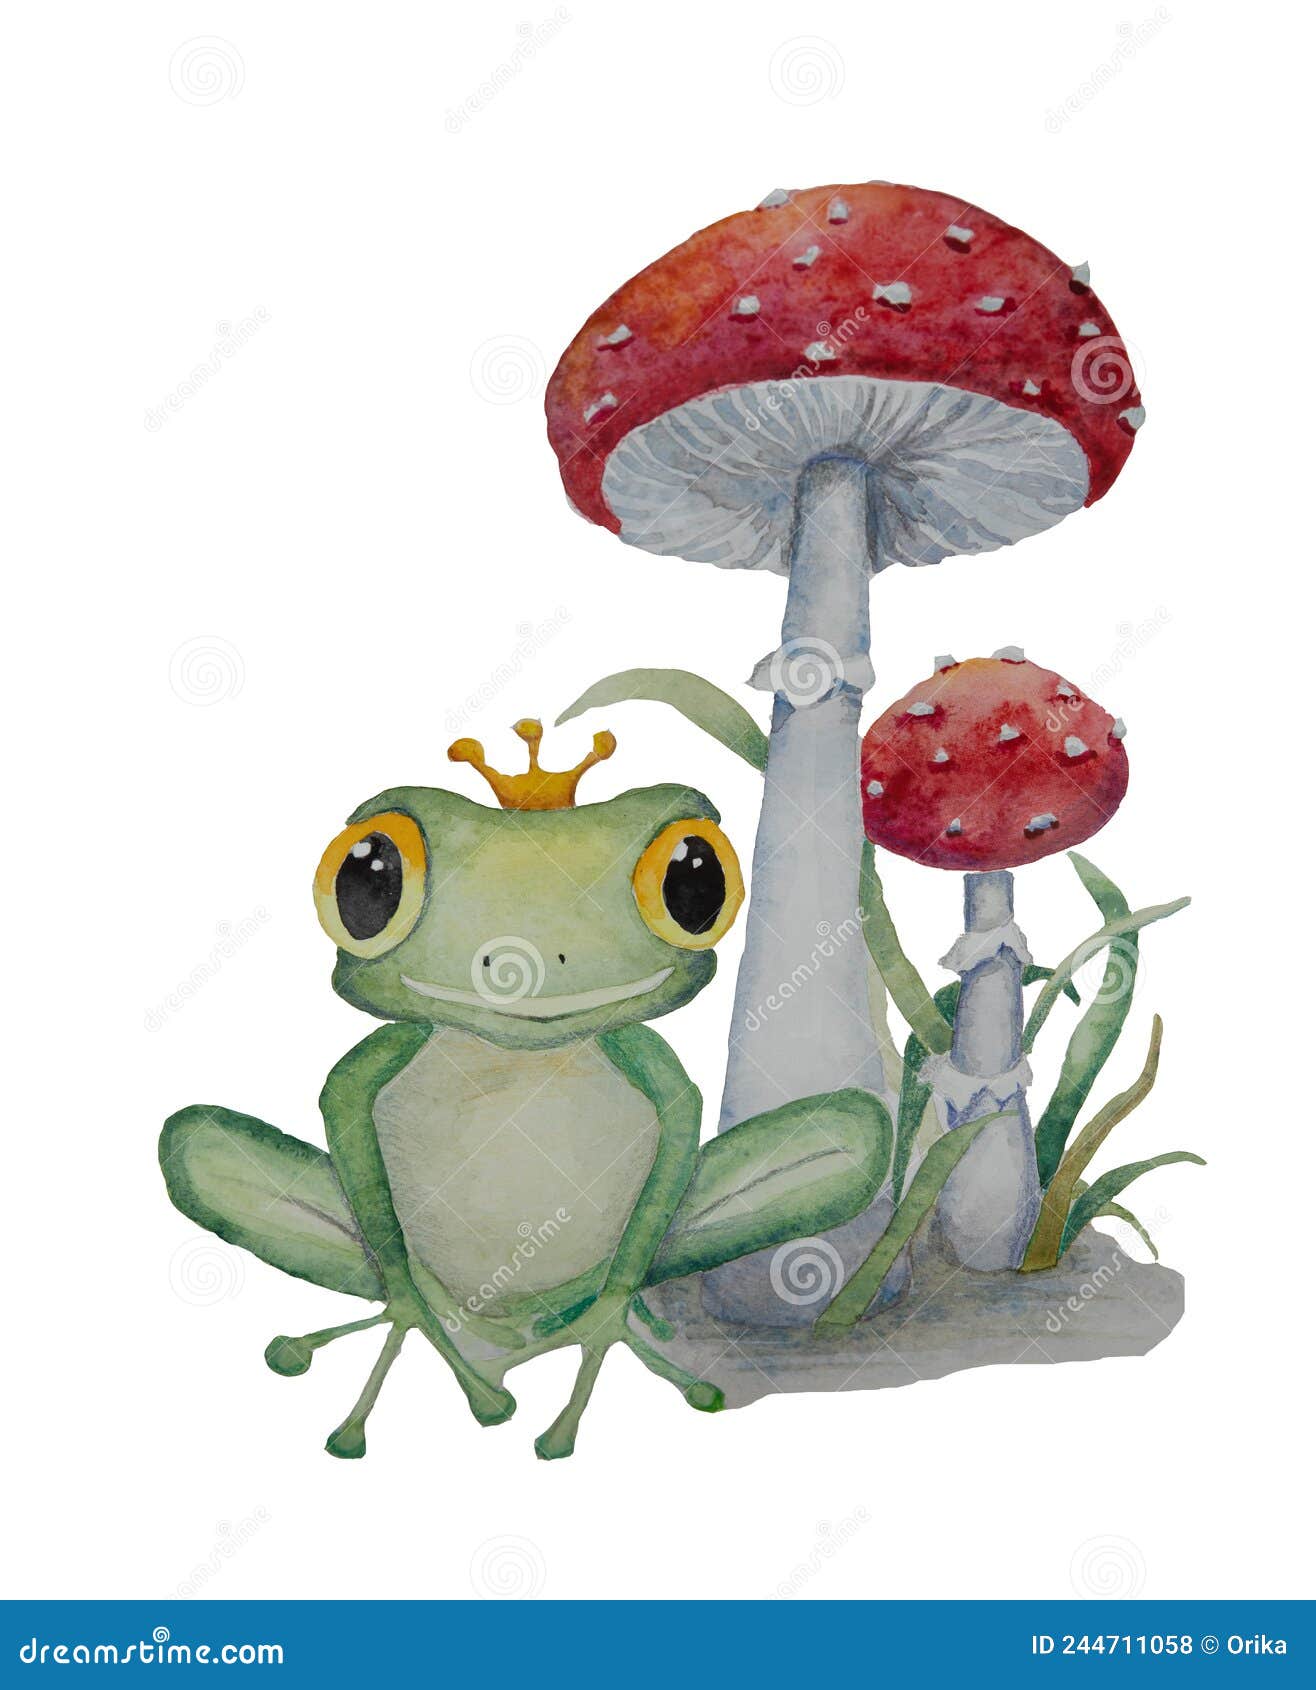 Cute frog illustration stock illustration. Illustration of watercolor ...